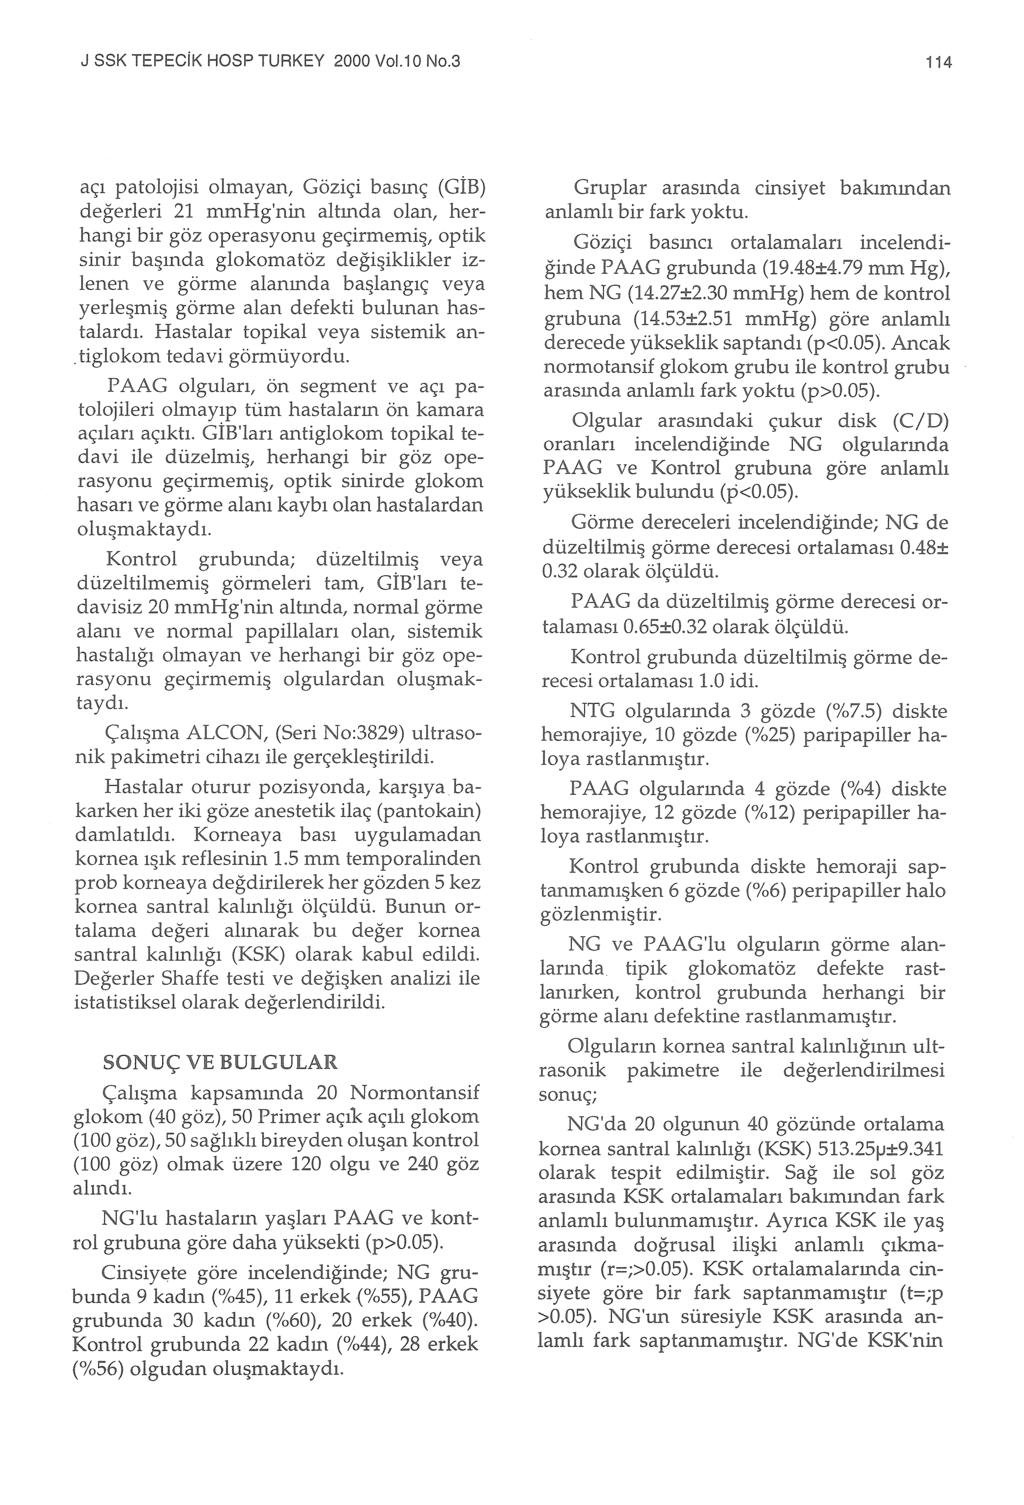 J SSK TEPECiK HOSP TURKEY 2000 Vol. 1 O No.